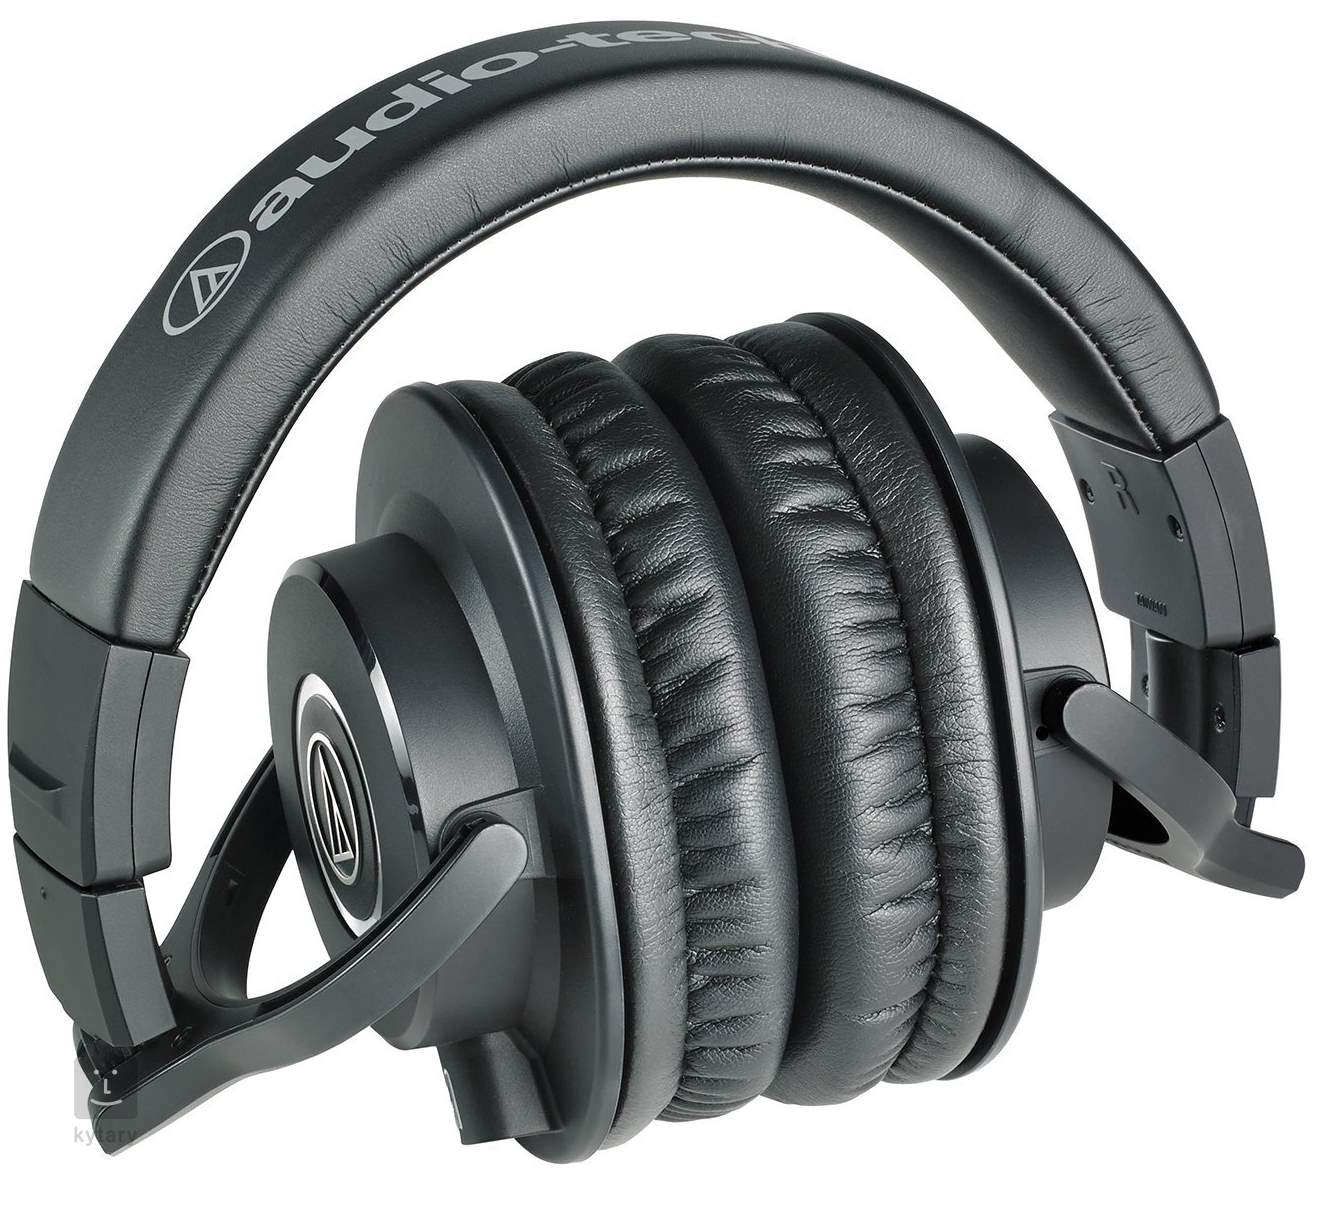 AUDIO-TECHNICA ATH-M50x Studio Headphones